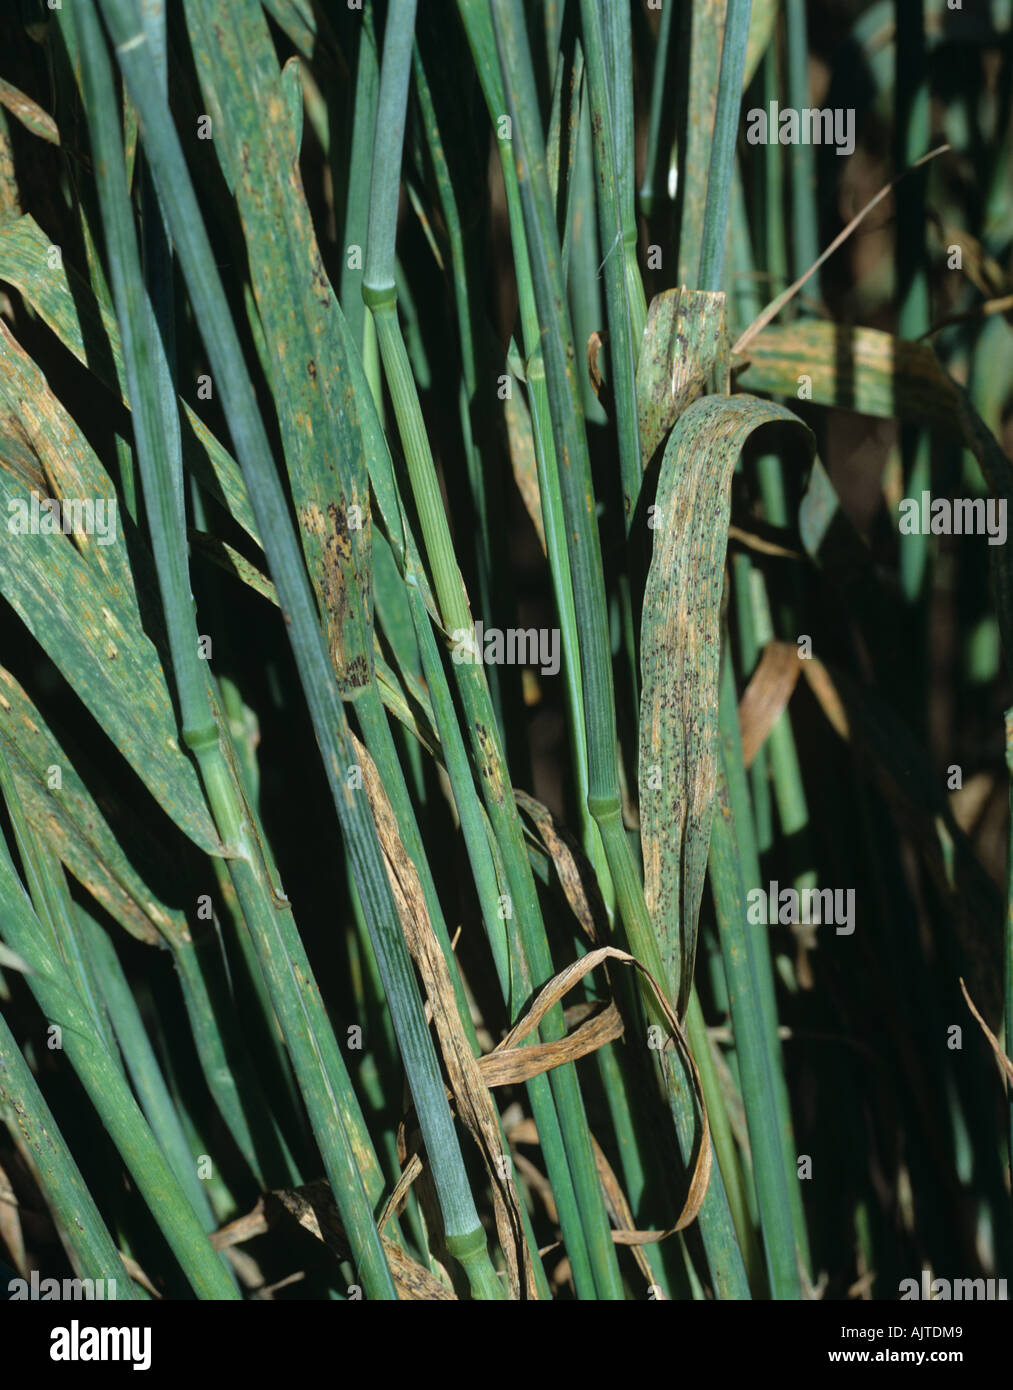 Crown rust Puccinia coronata at teliospore pustule stage on oats leaves Stock Photo